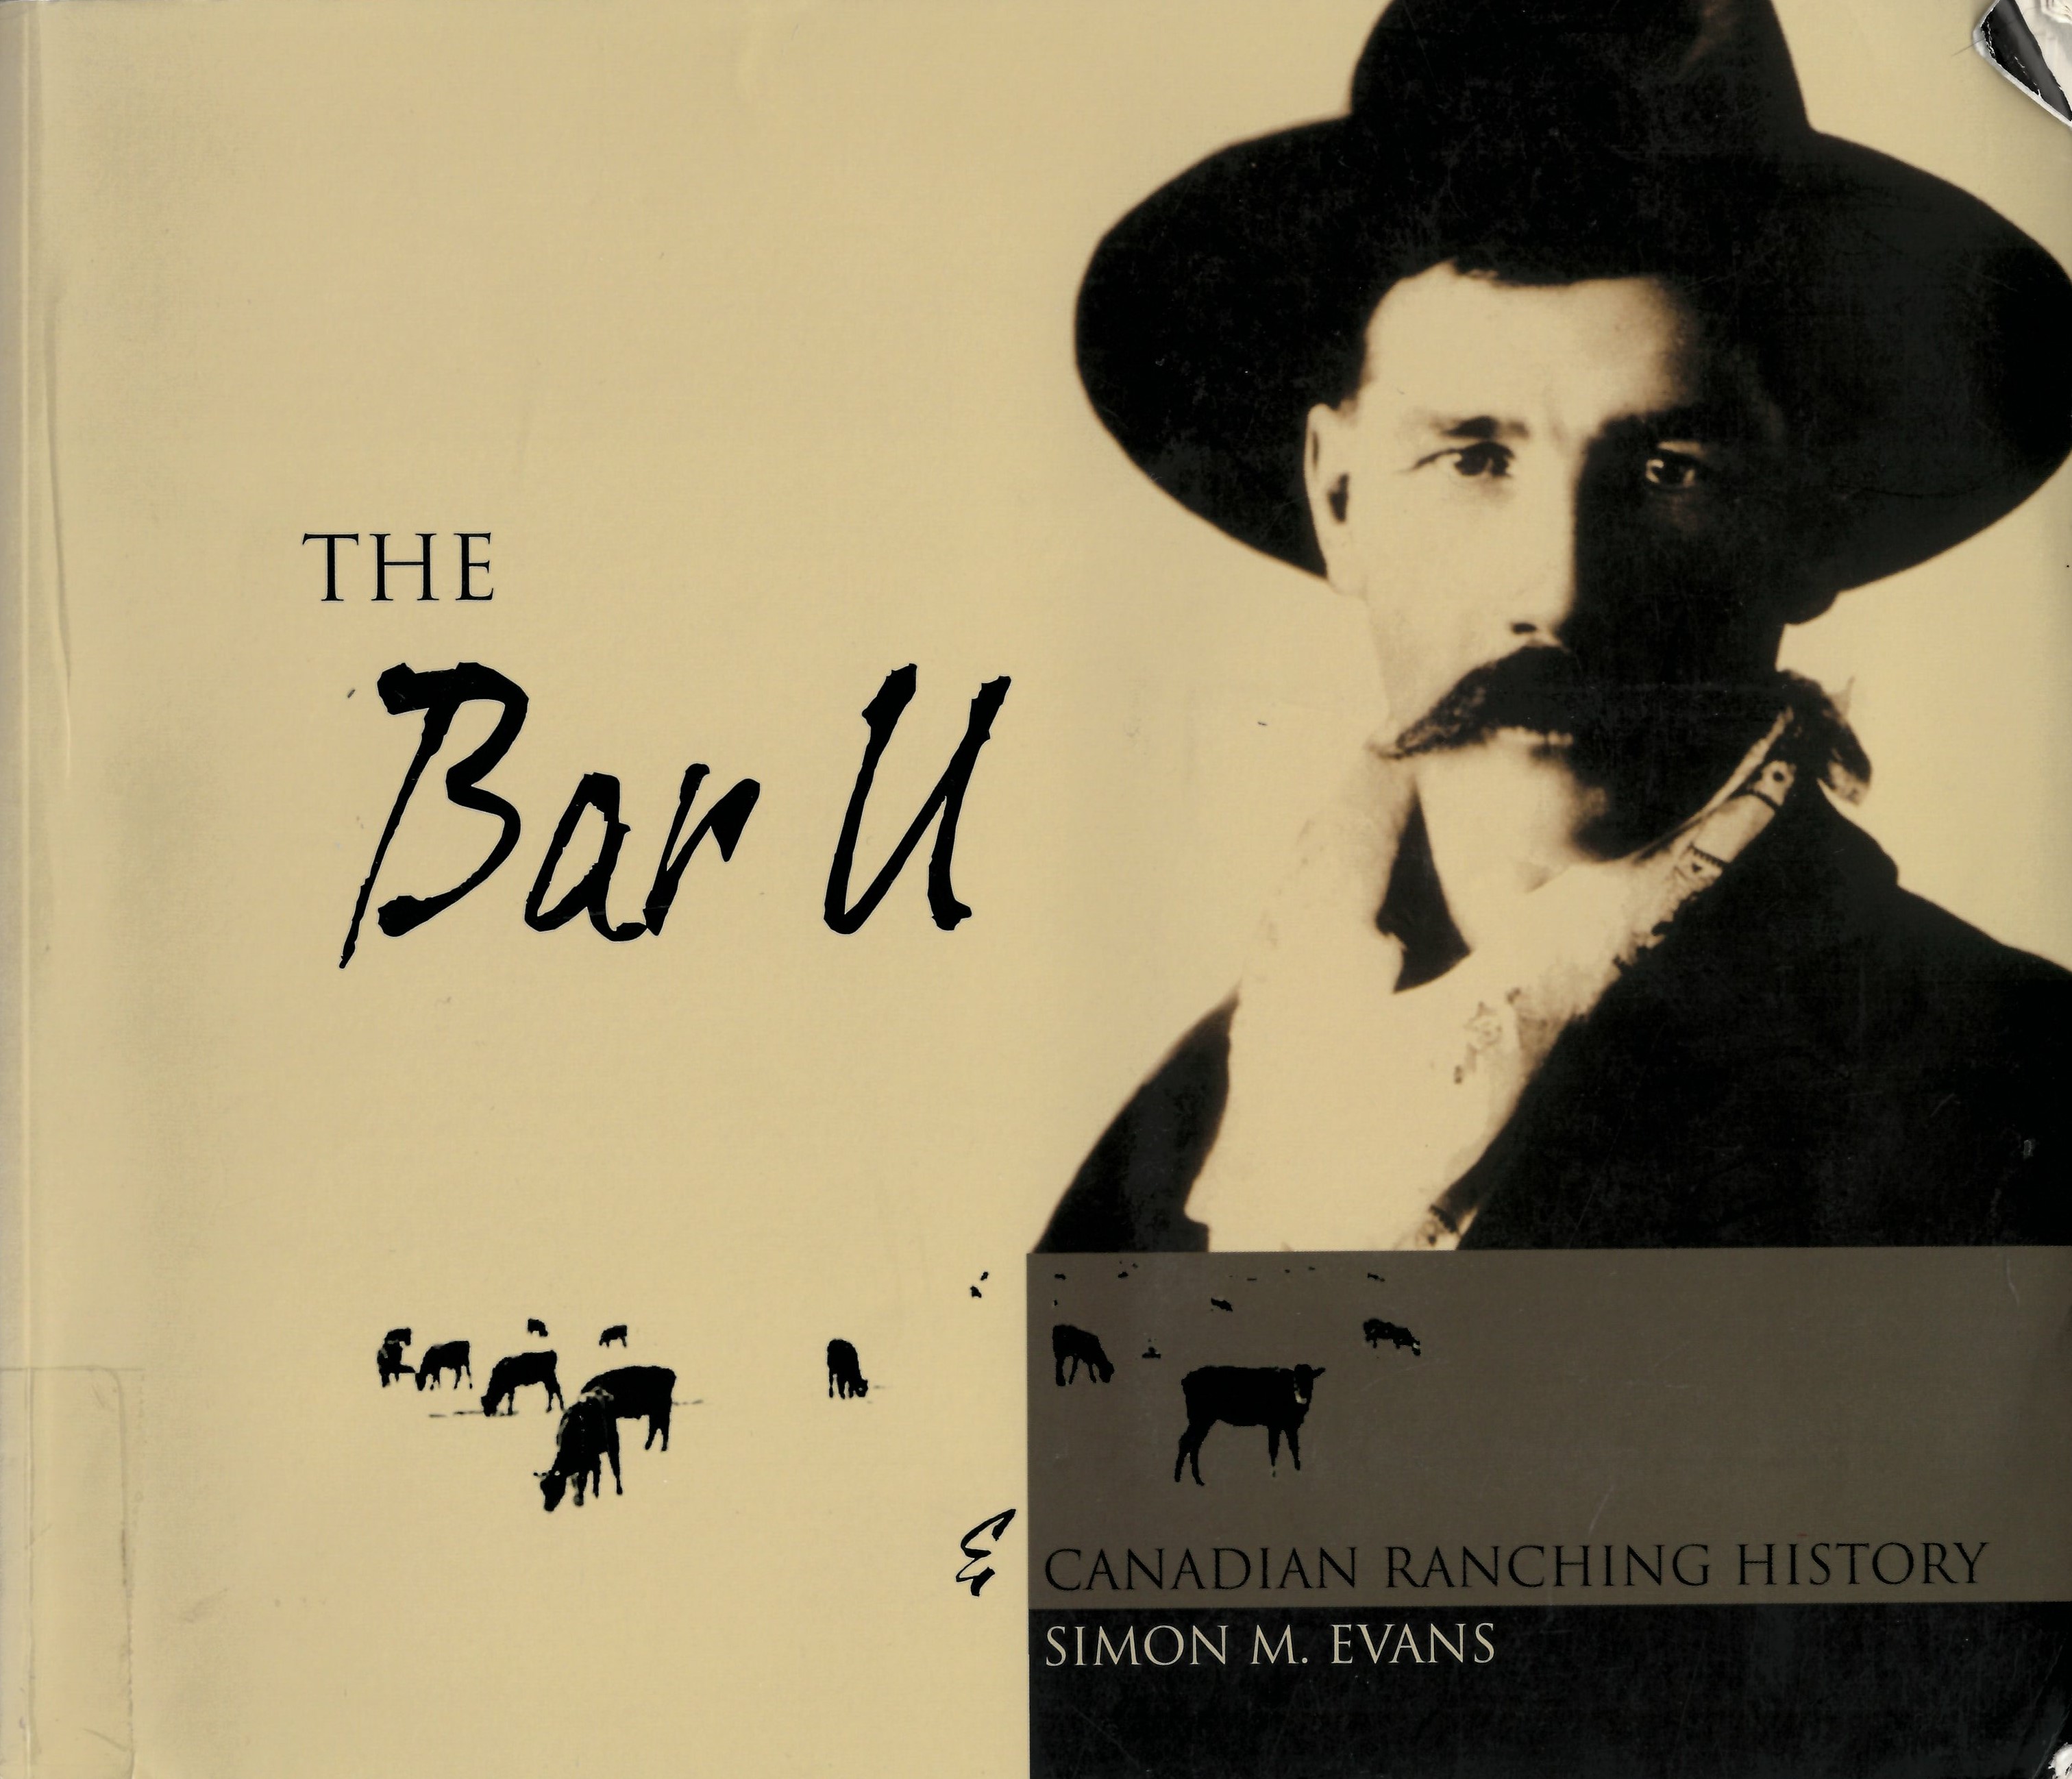 The Bar U & Canadian ranching history